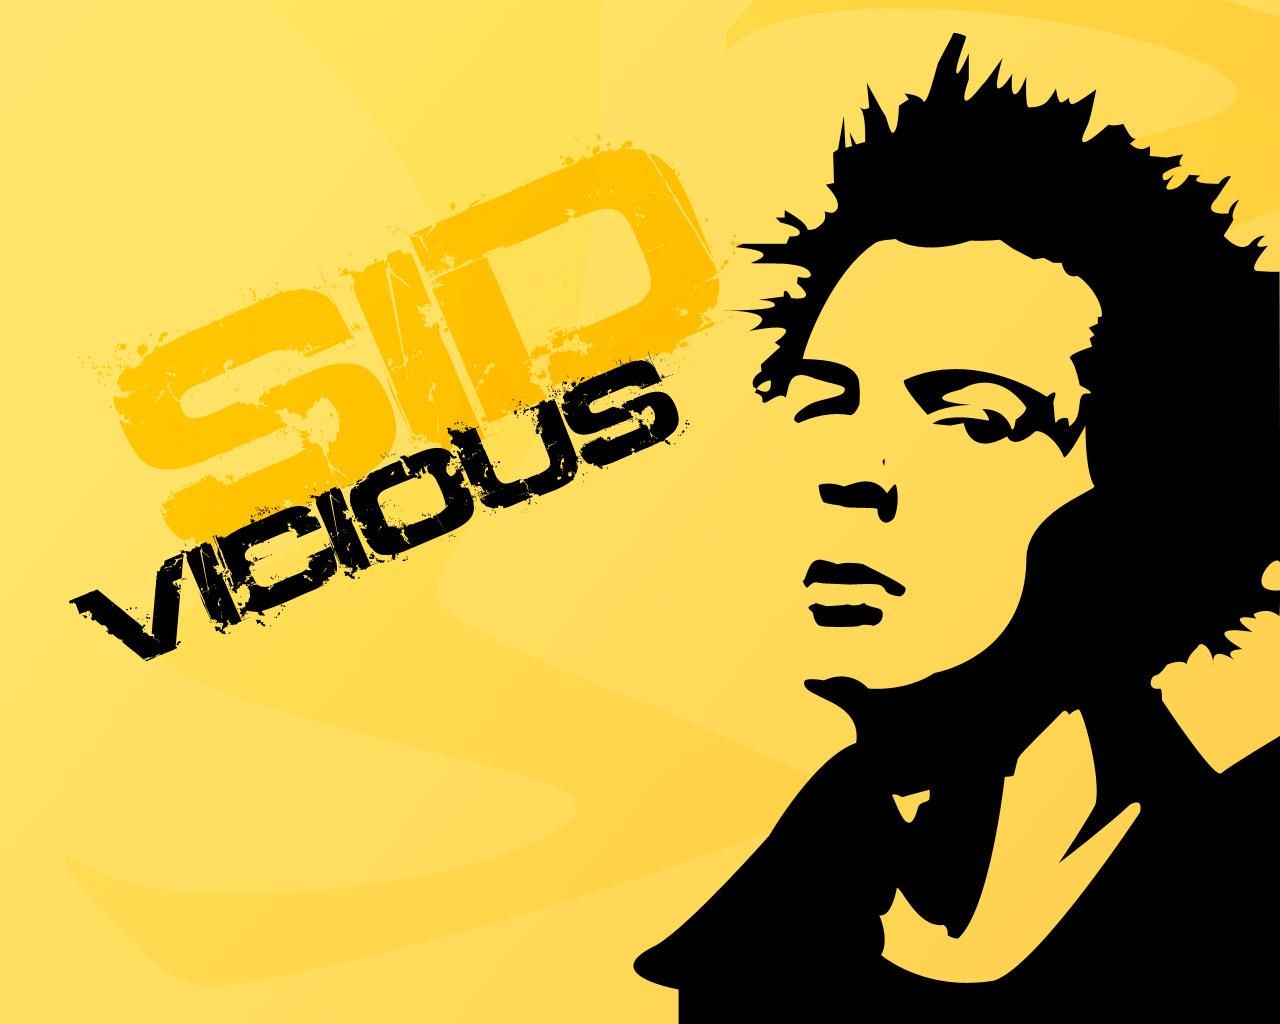 Sid Vicious By Danny Boy On Deviantart | HD Wallpapers Range